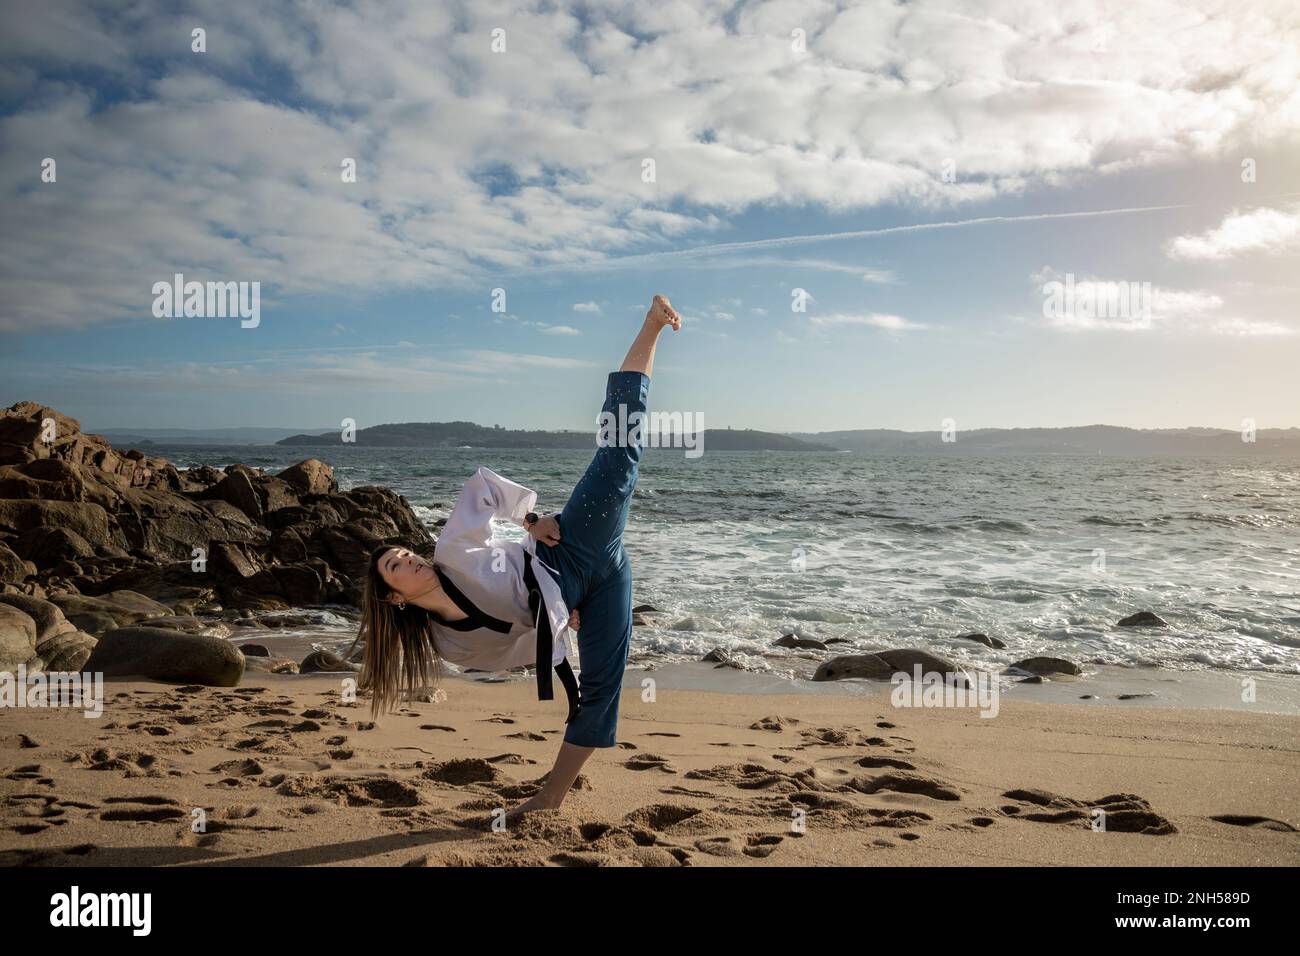 woman doing taekwondo on the beach giving a kick Stock Photo